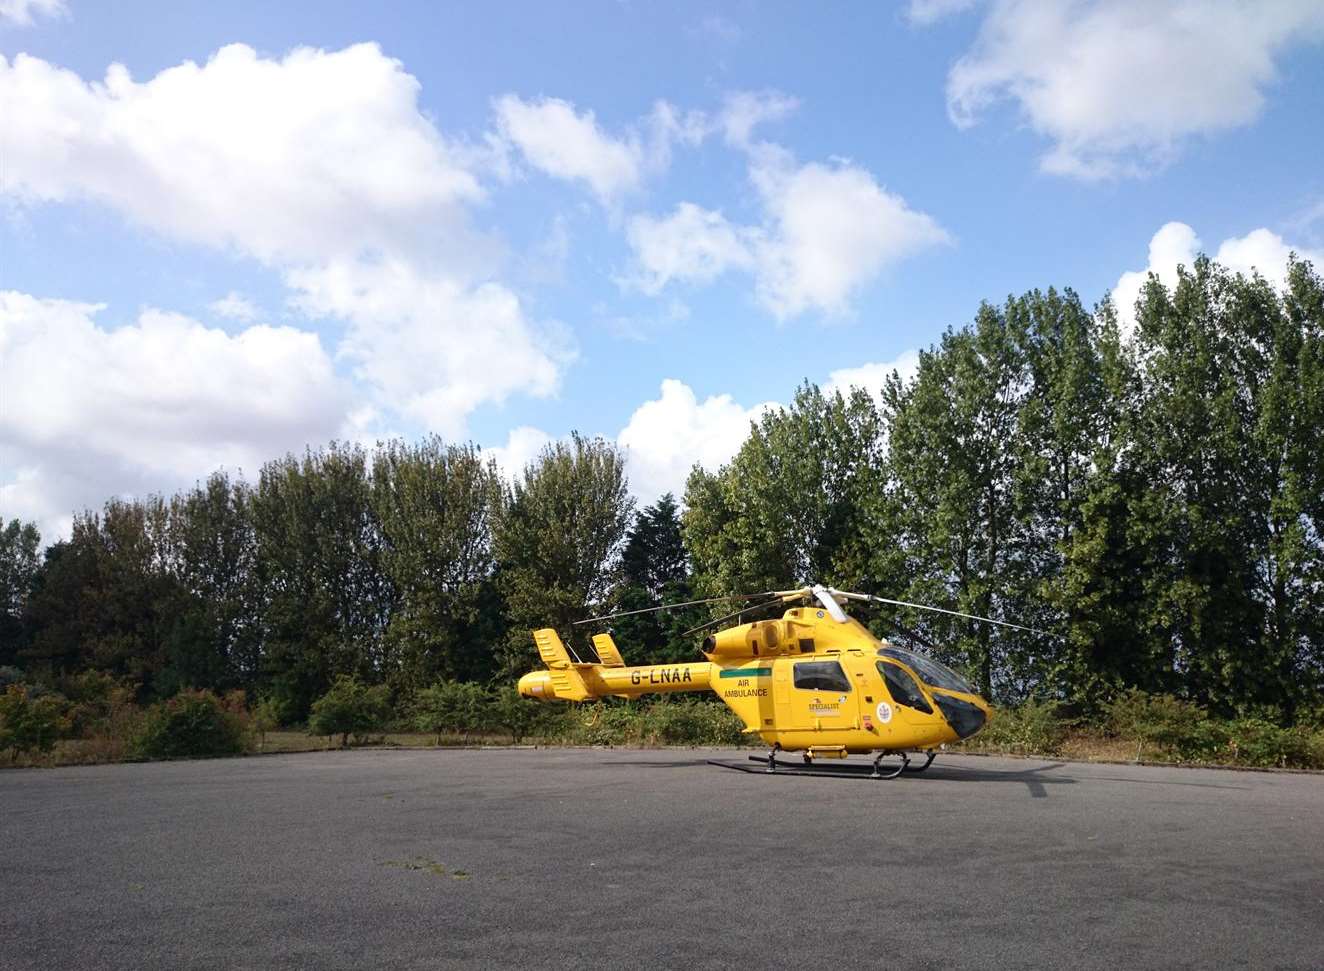 The air ambulance at Fowlmead on Sunday